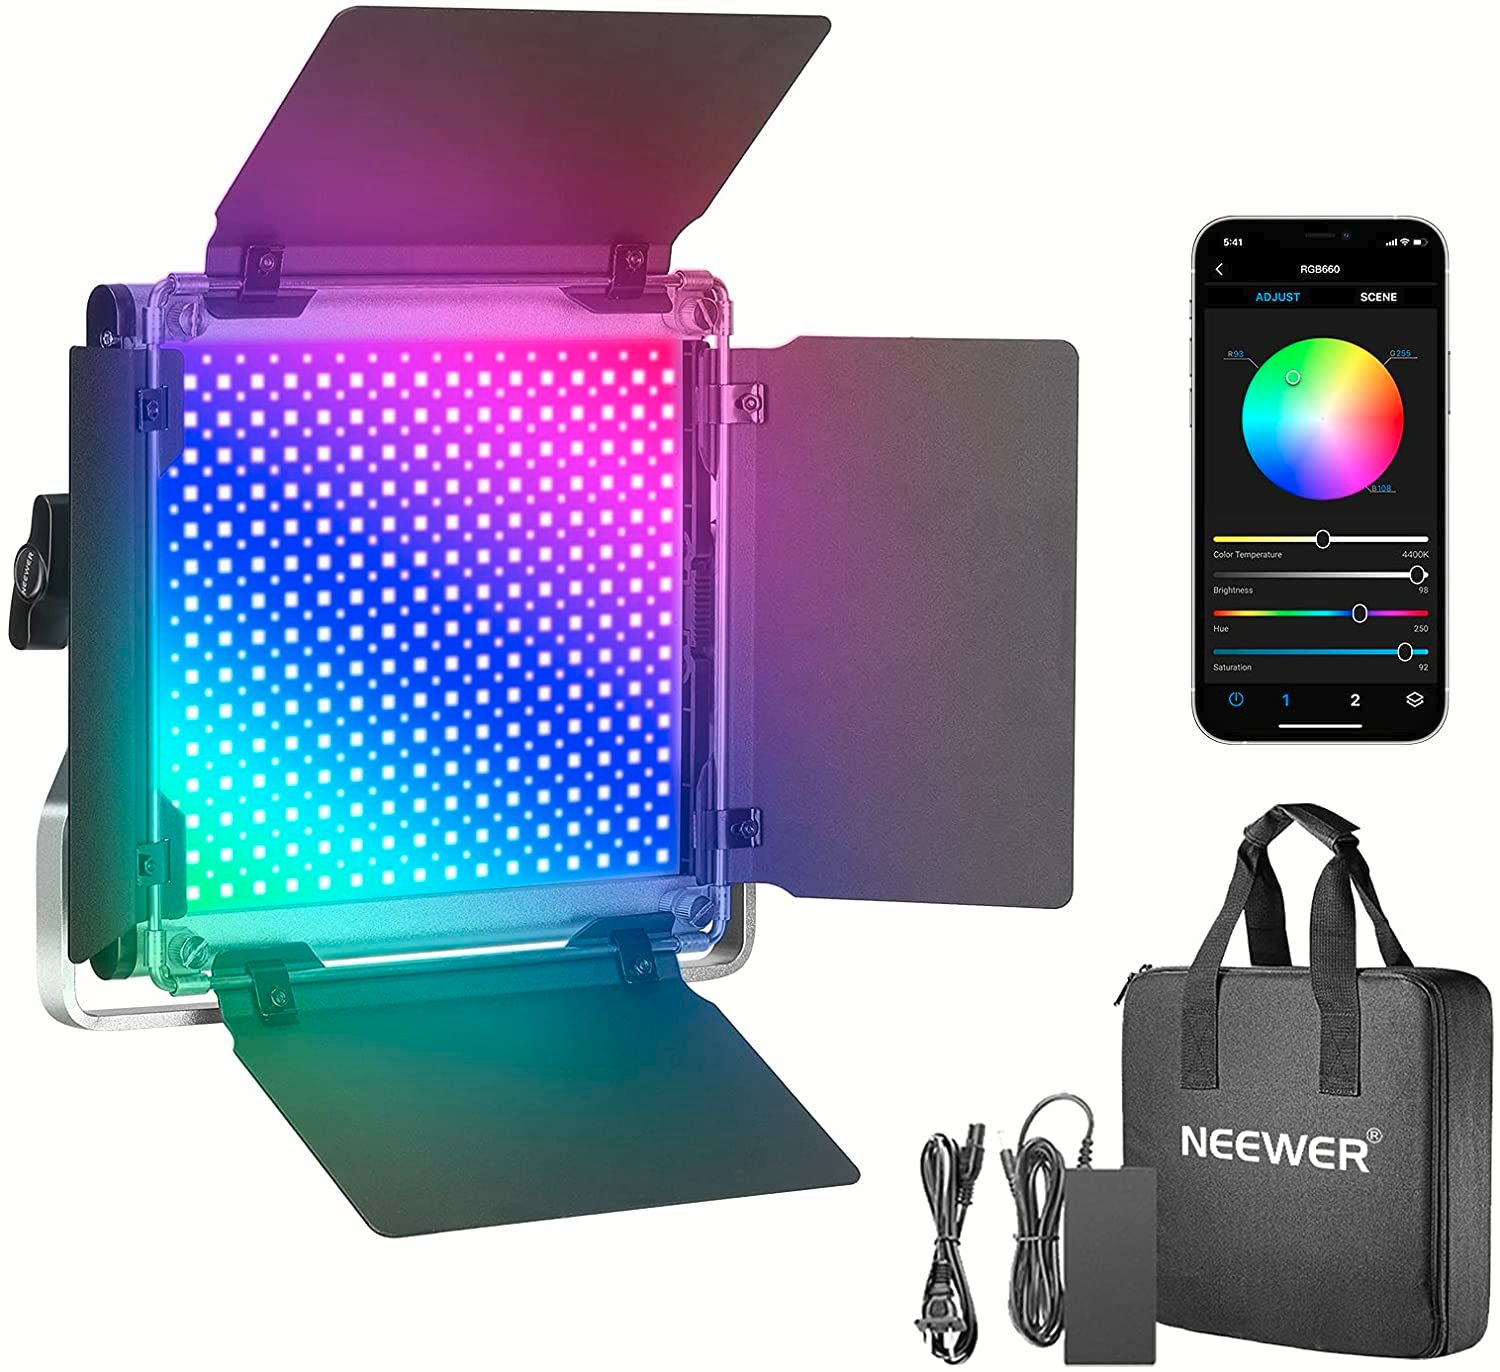 Neewer 660 RGB LED + Visico LS-8005 + NP-970 punjač - 2